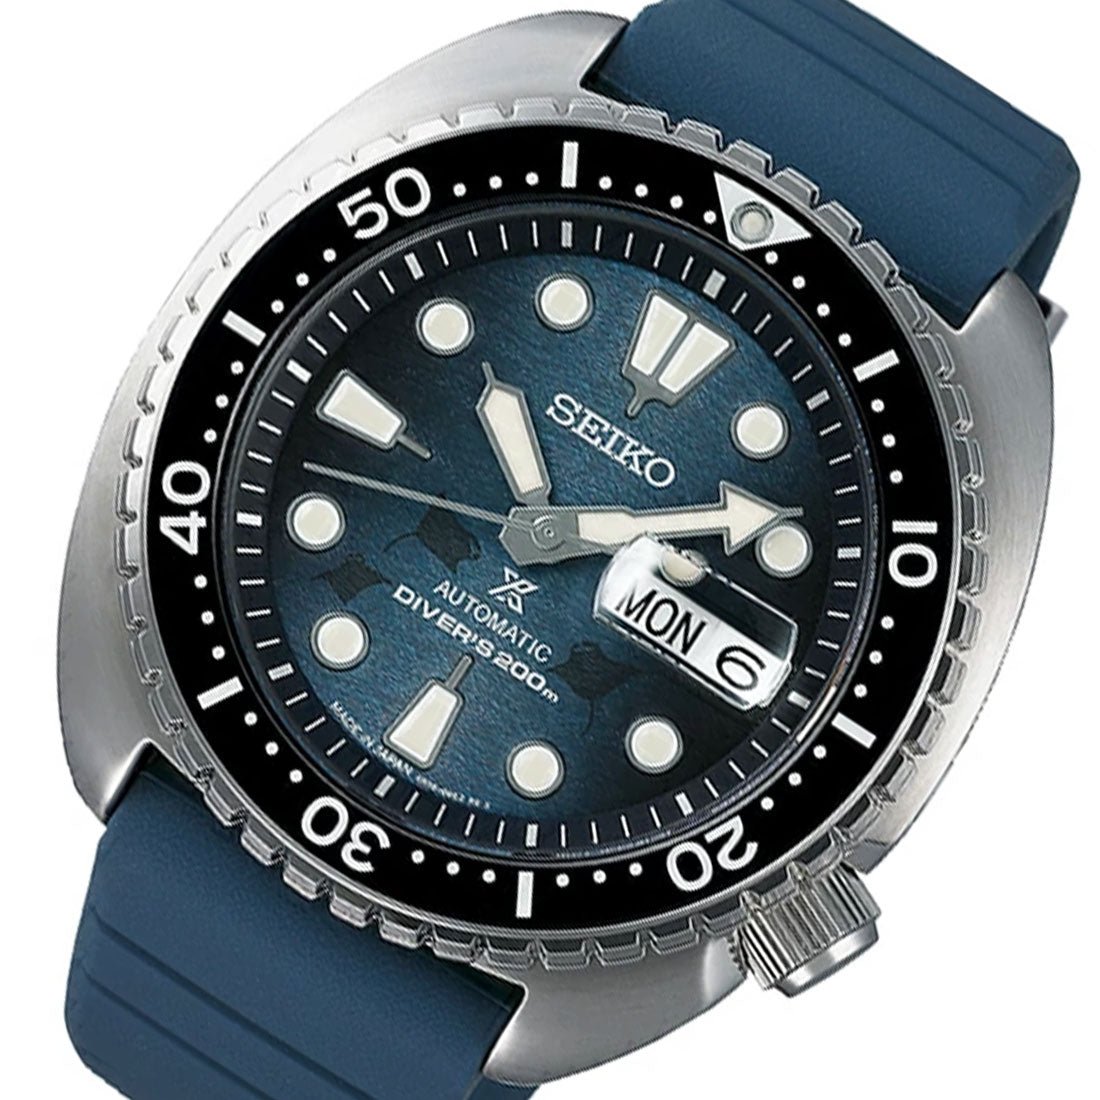 Seiko Prospex Manta Ray Divers JDM Watch SBDY079 -Seiko